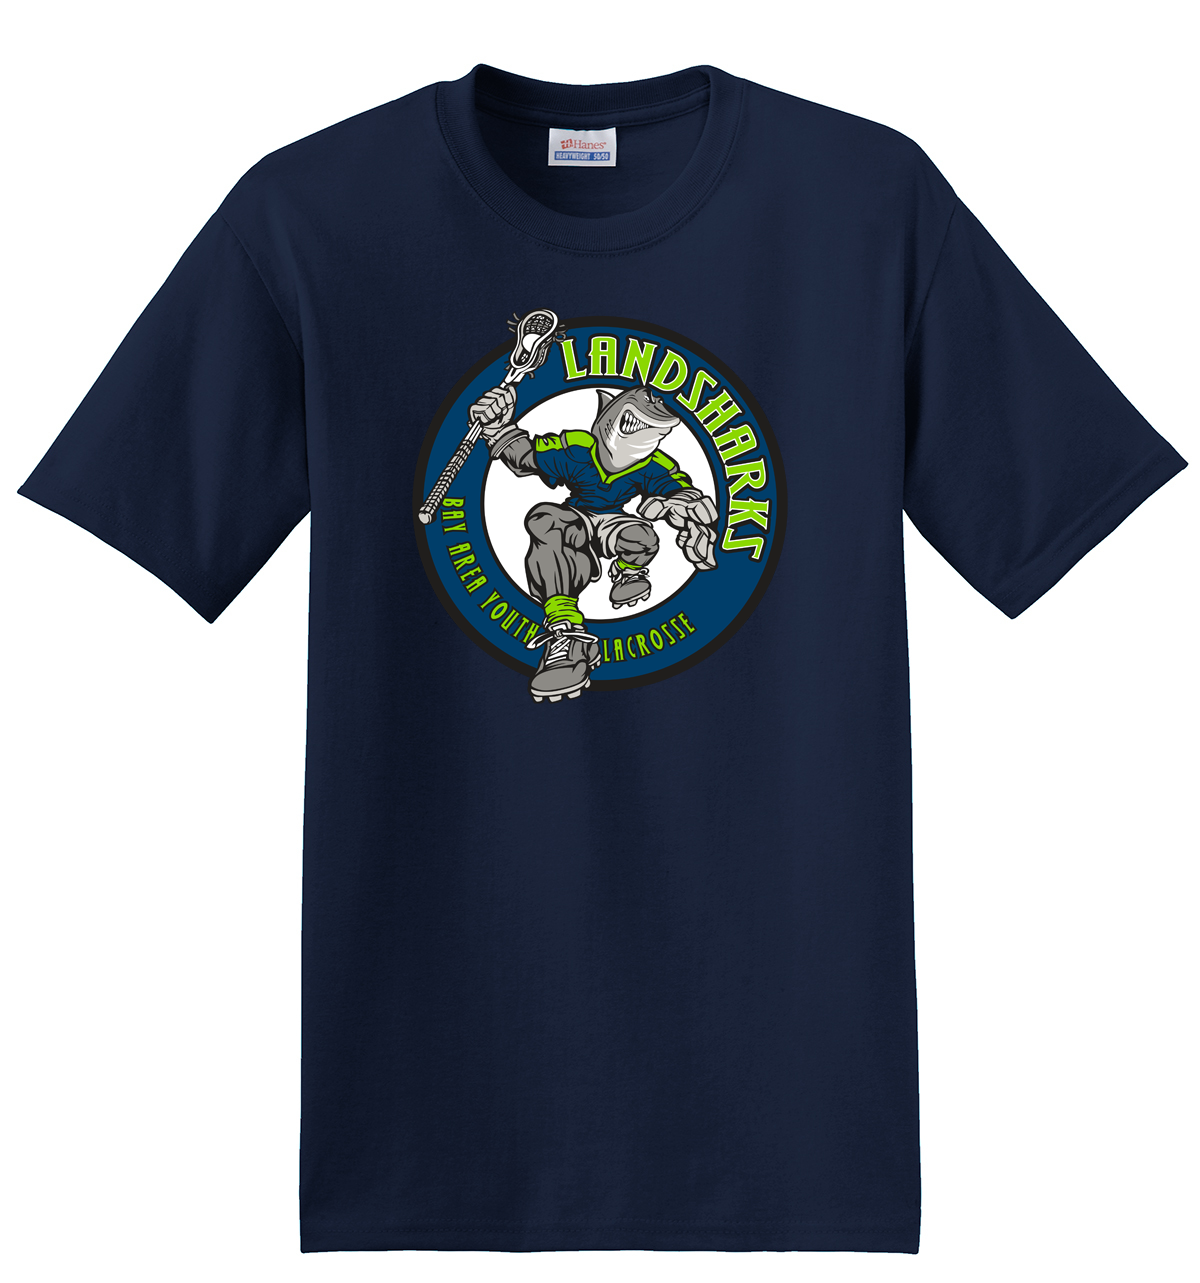 Bay Area Landsharks Navy T-Shirt